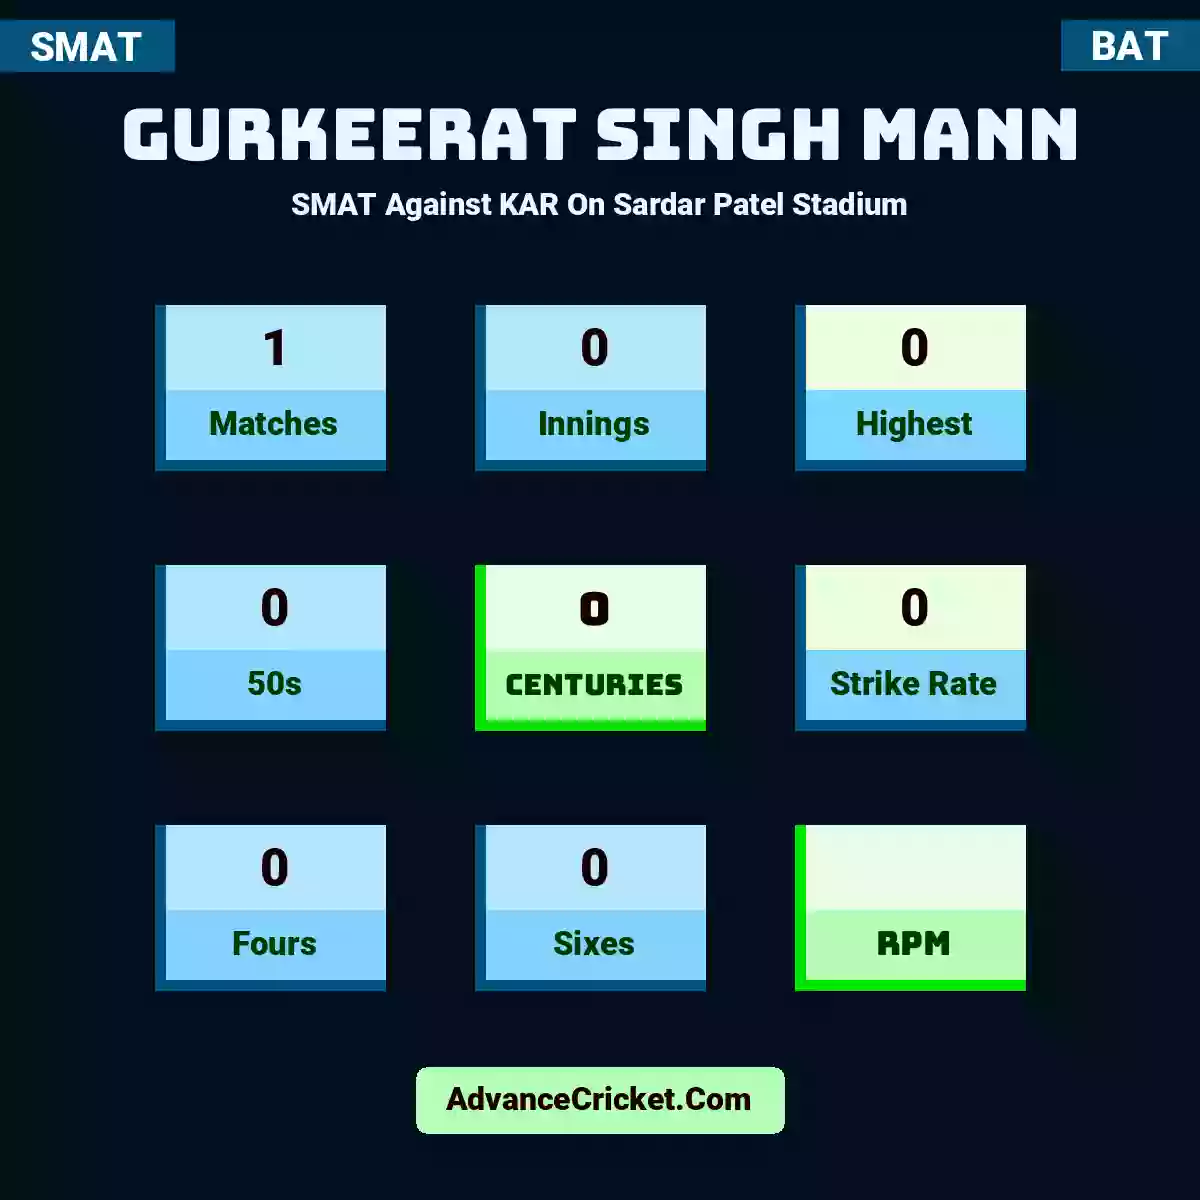 Gurkeerat Singh Mann SMAT  Against KAR On Sardar Patel Stadium, Gurkeerat Singh Mann played 1 matches, scored 0 runs as highest, 0 half-centuries, and 0 centuries, with a strike rate of 0. G.Mann hit 0 fours and 0 sixes.